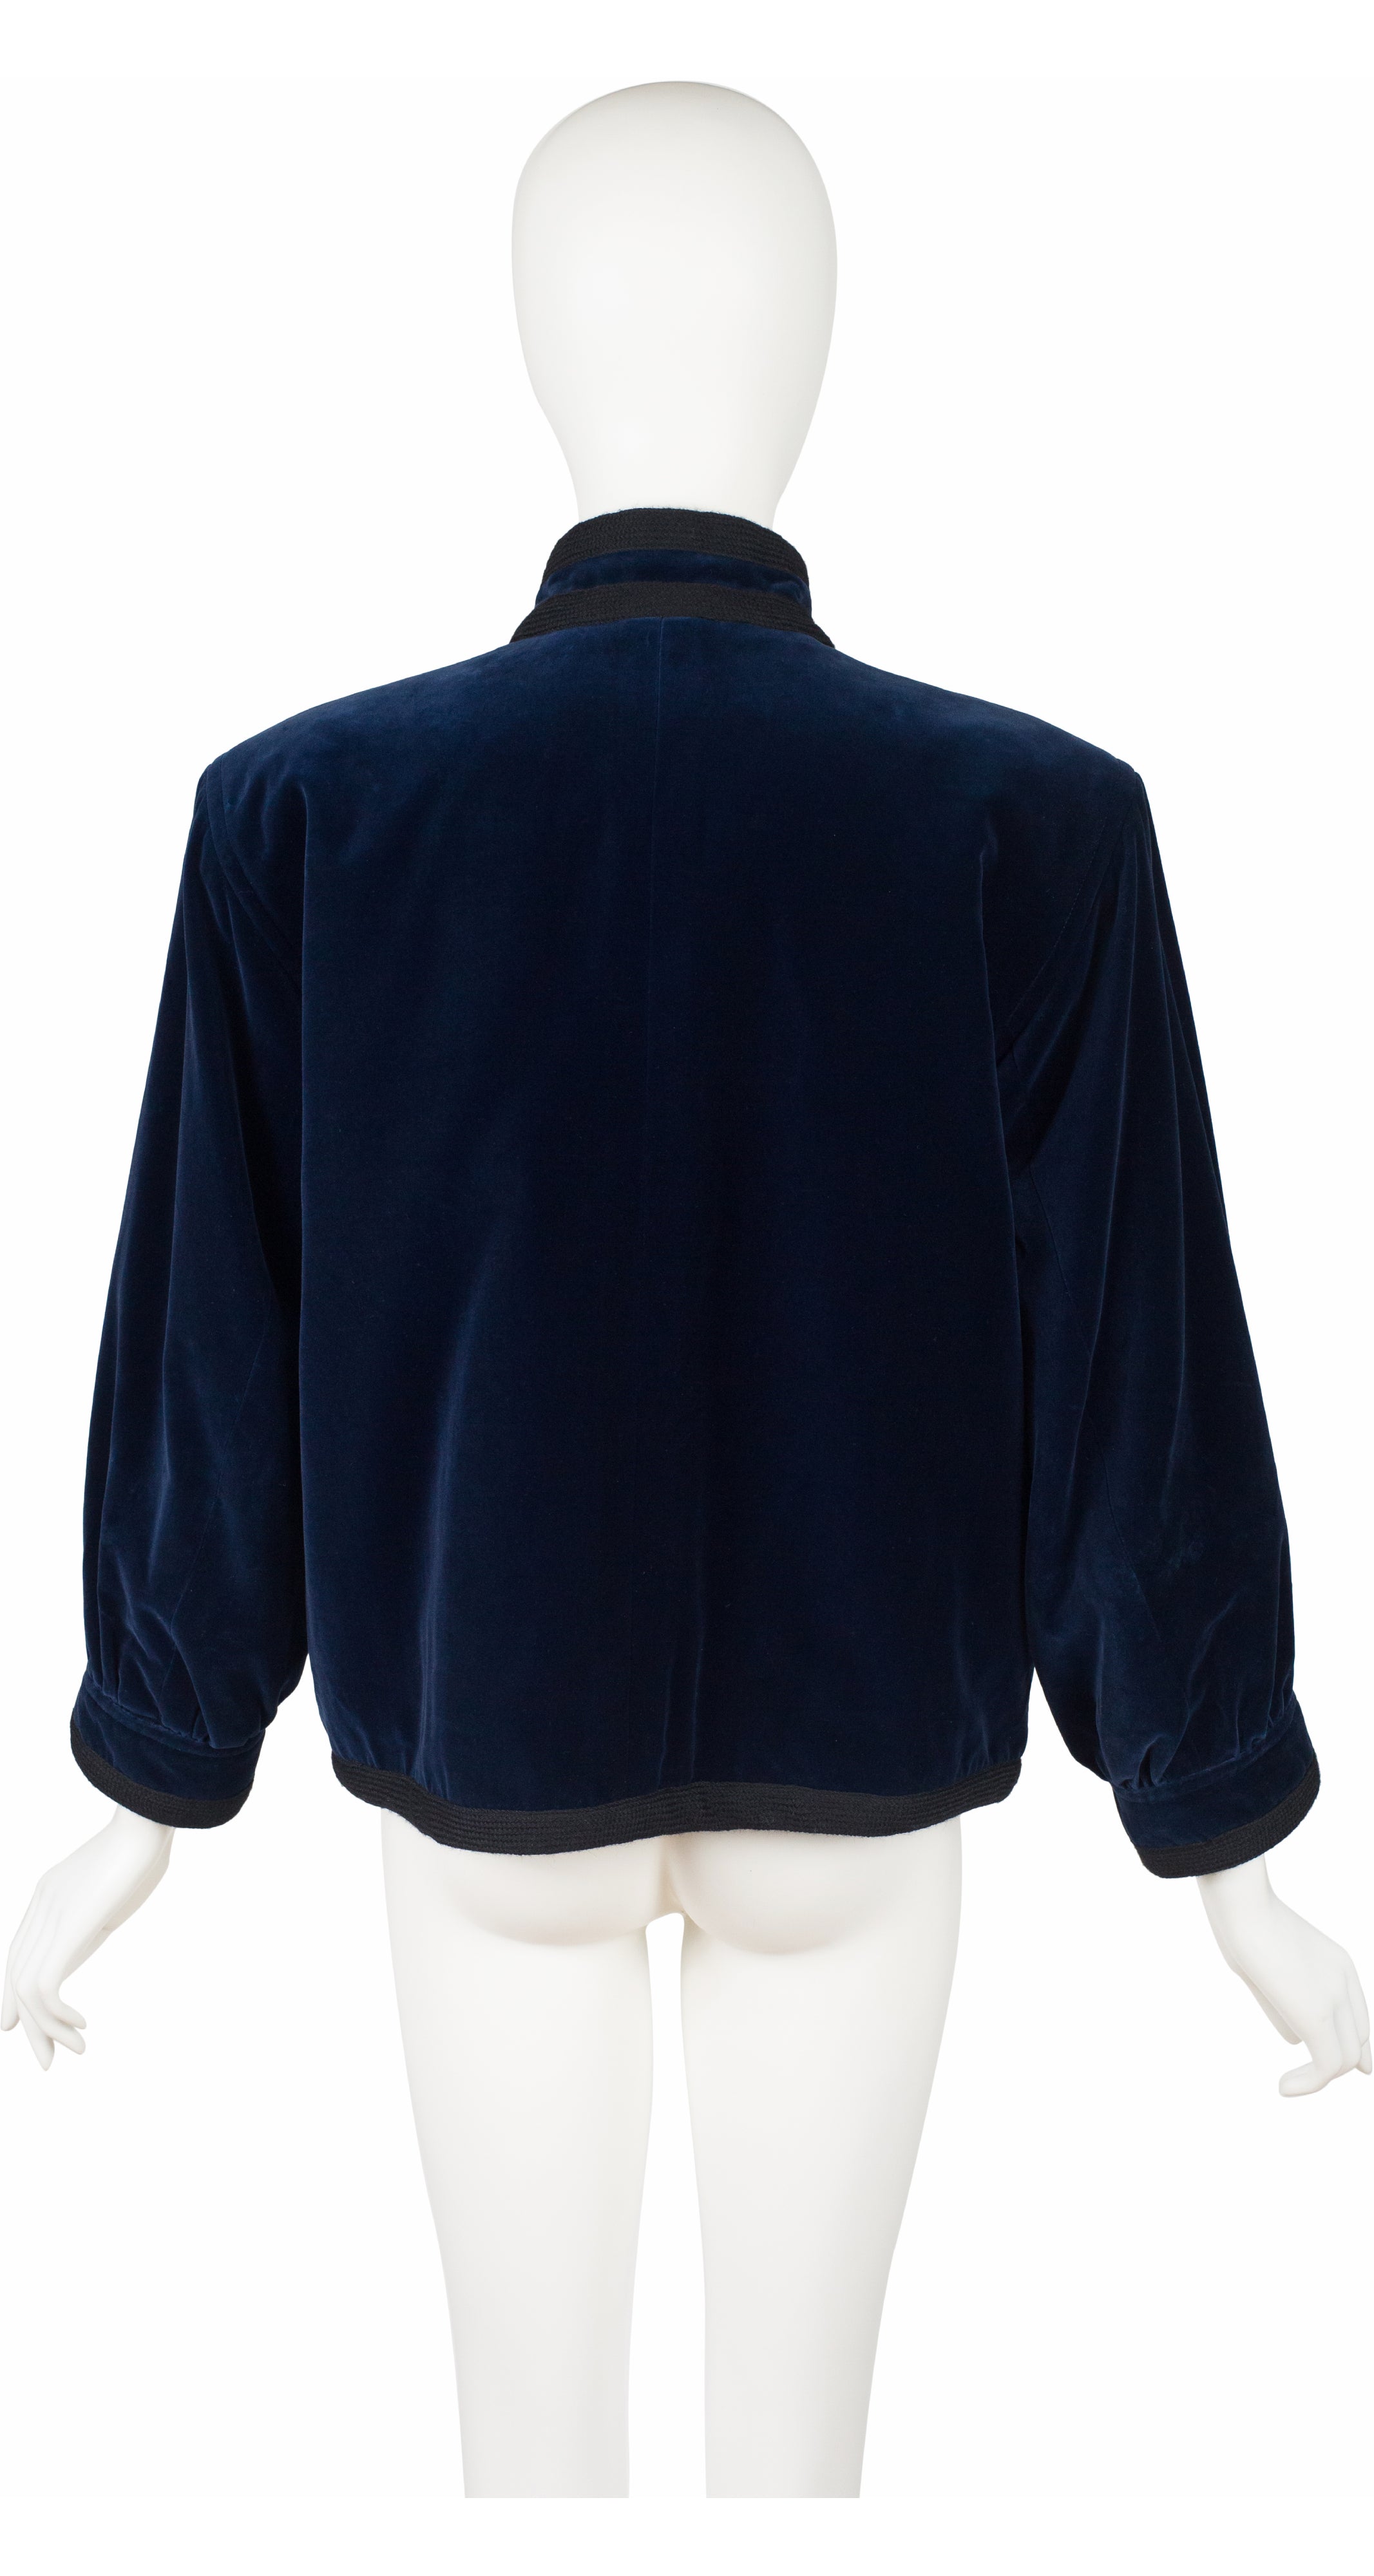 1984-85 F/W Runway Navy Cotton Velvet Jacket